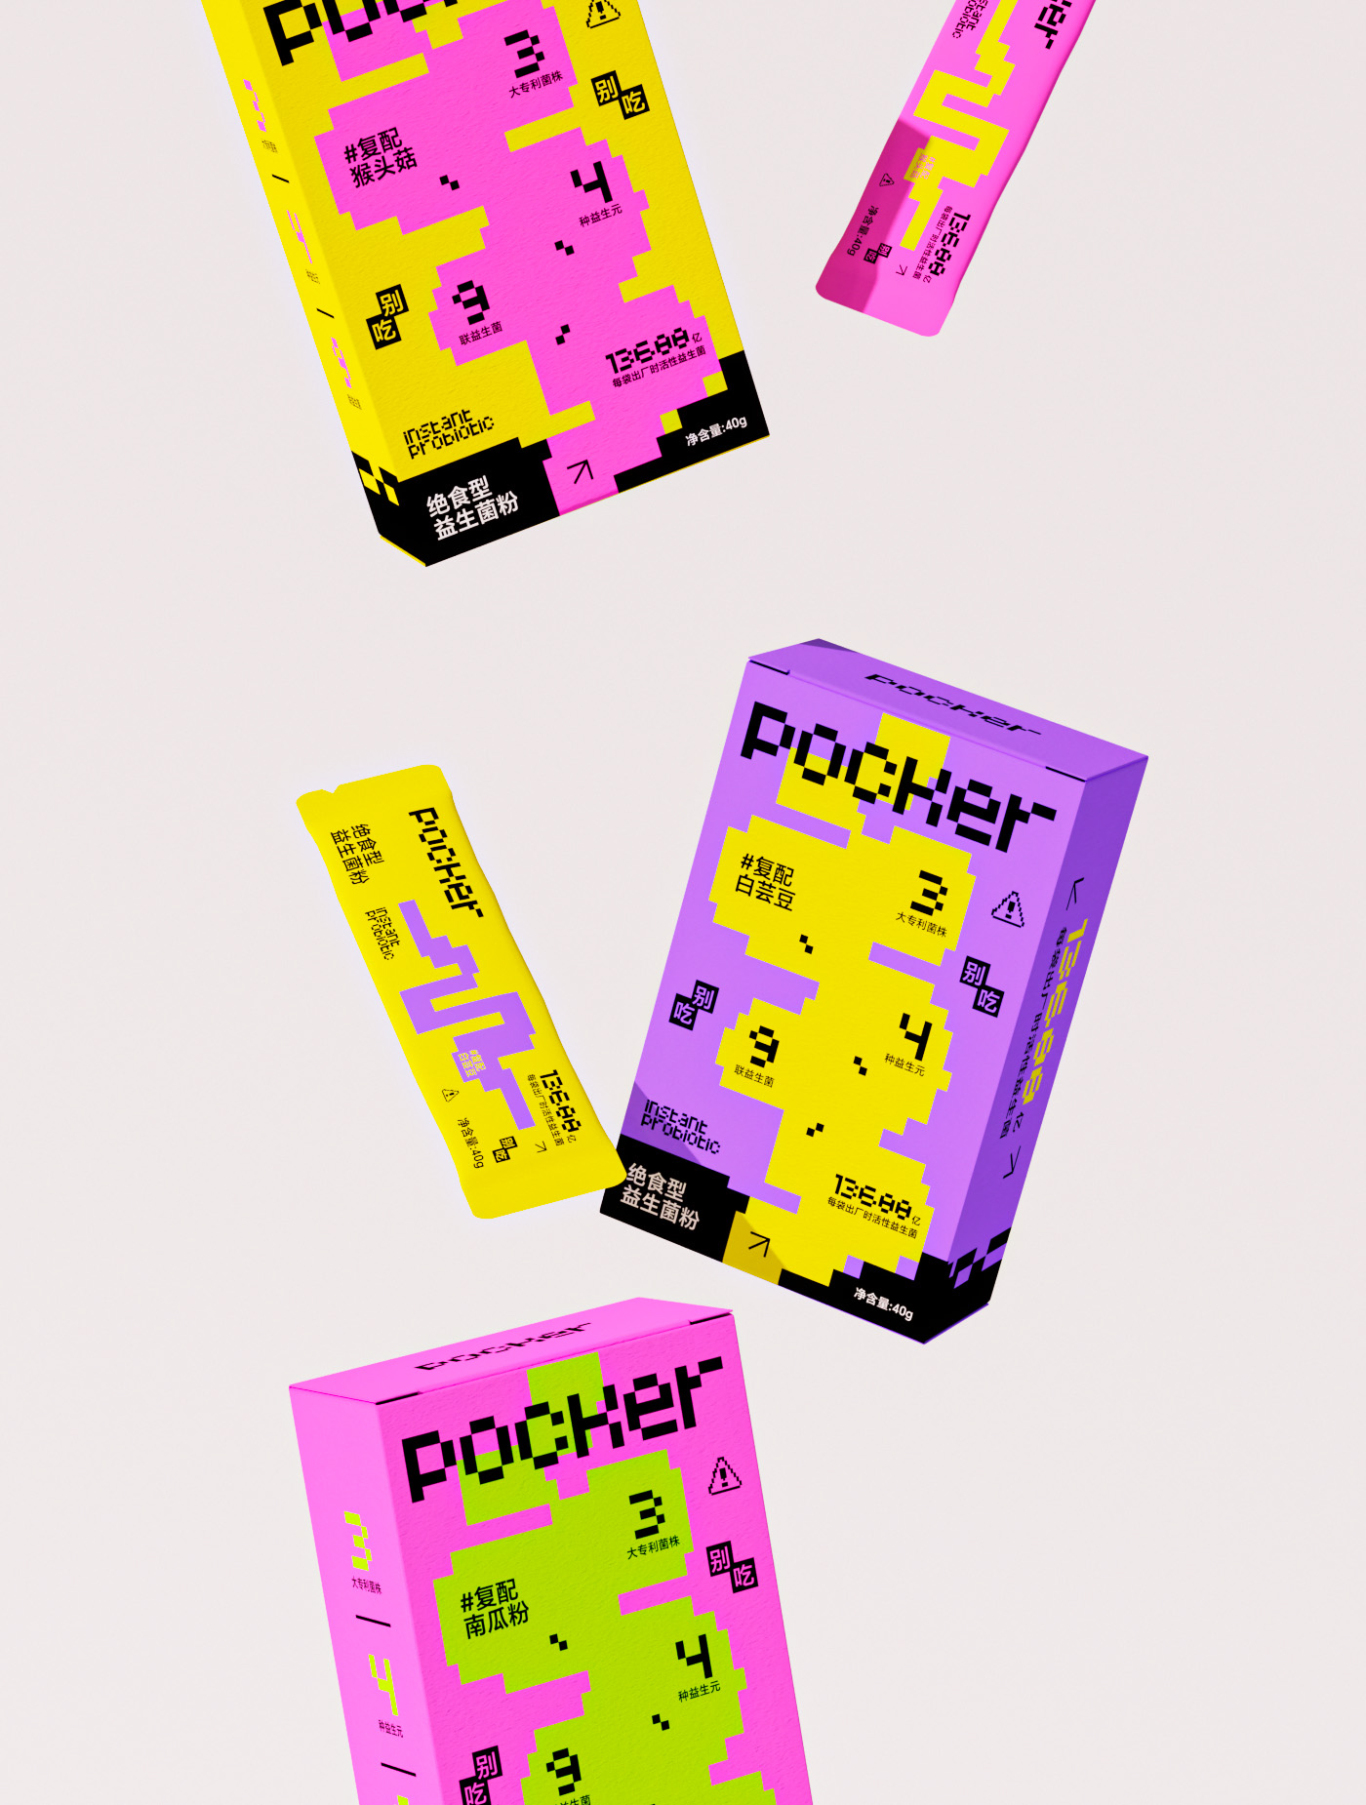 POCKER X 绝食型肠道卫士·别吃别吃丨益生菌包装设计图3